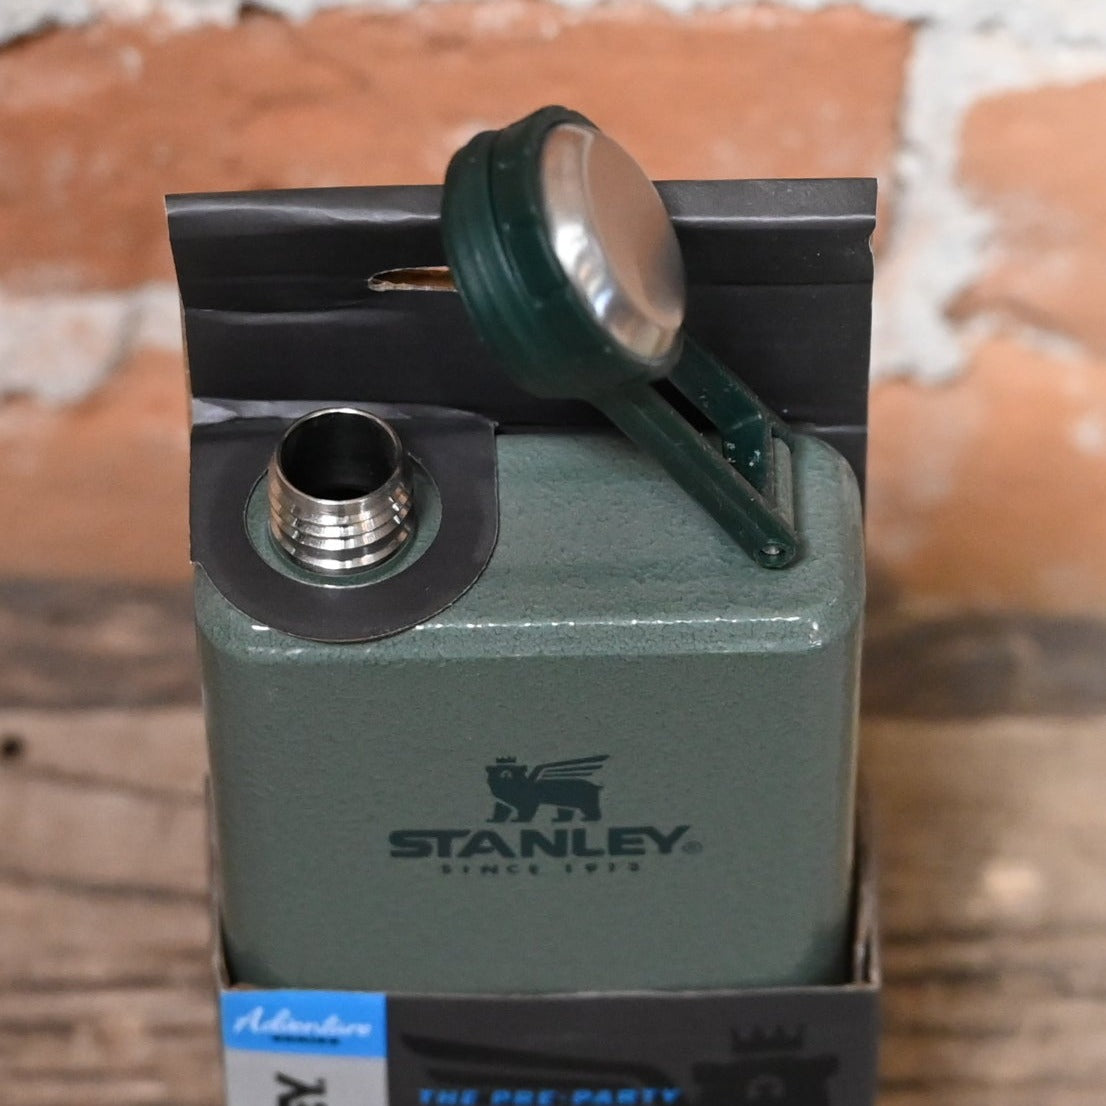 Stanley Stainless Steel Flask in Hammertone Green